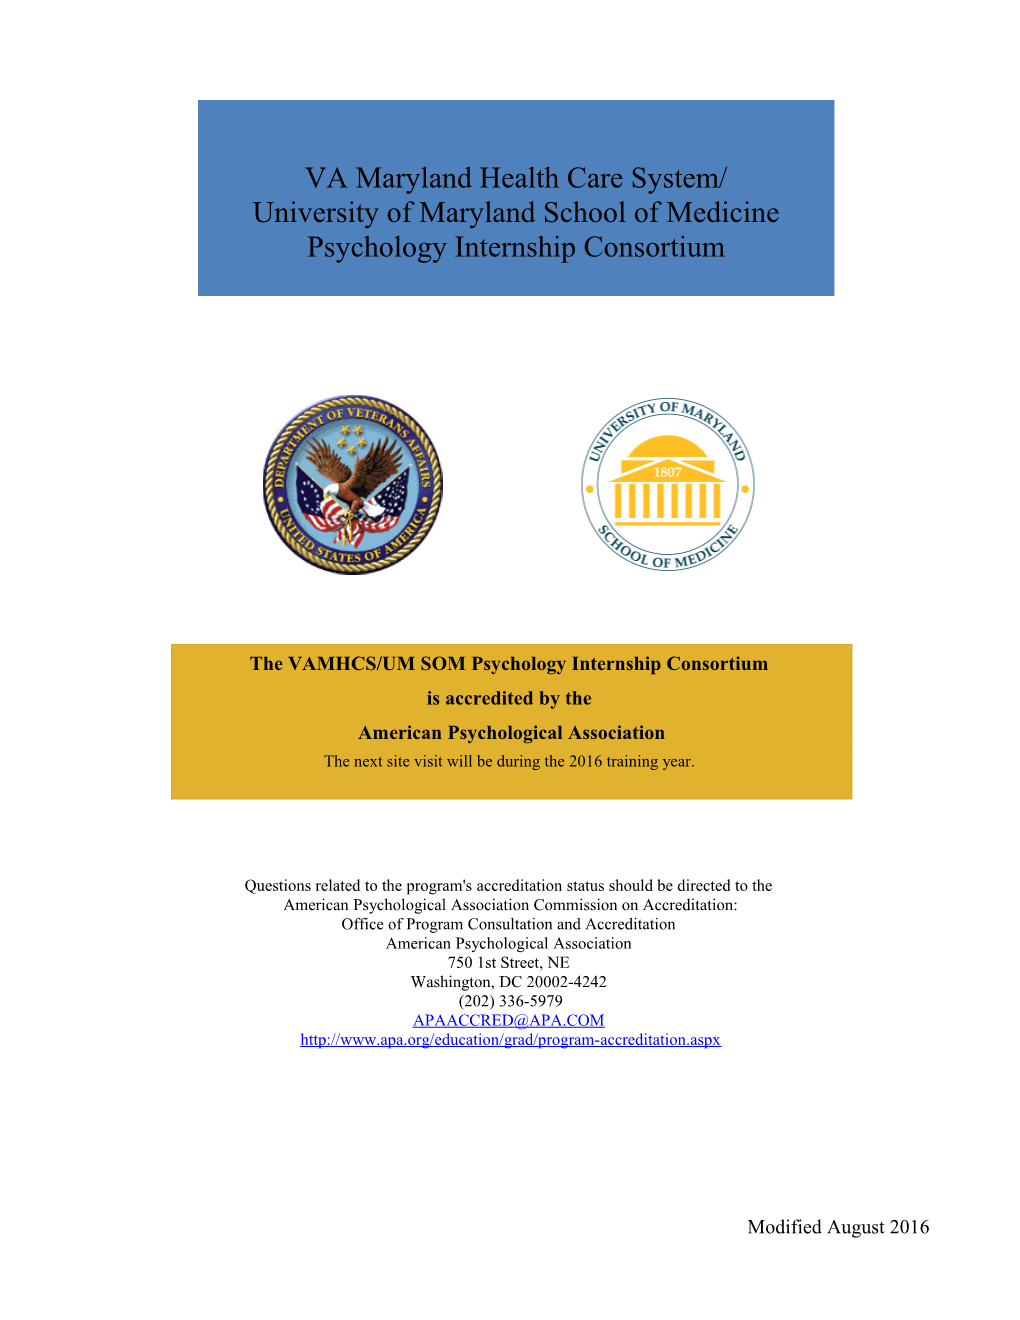 VAMHCS-UMB Psychology Internship Brochure (U.S. Department of Veterans Affairs)